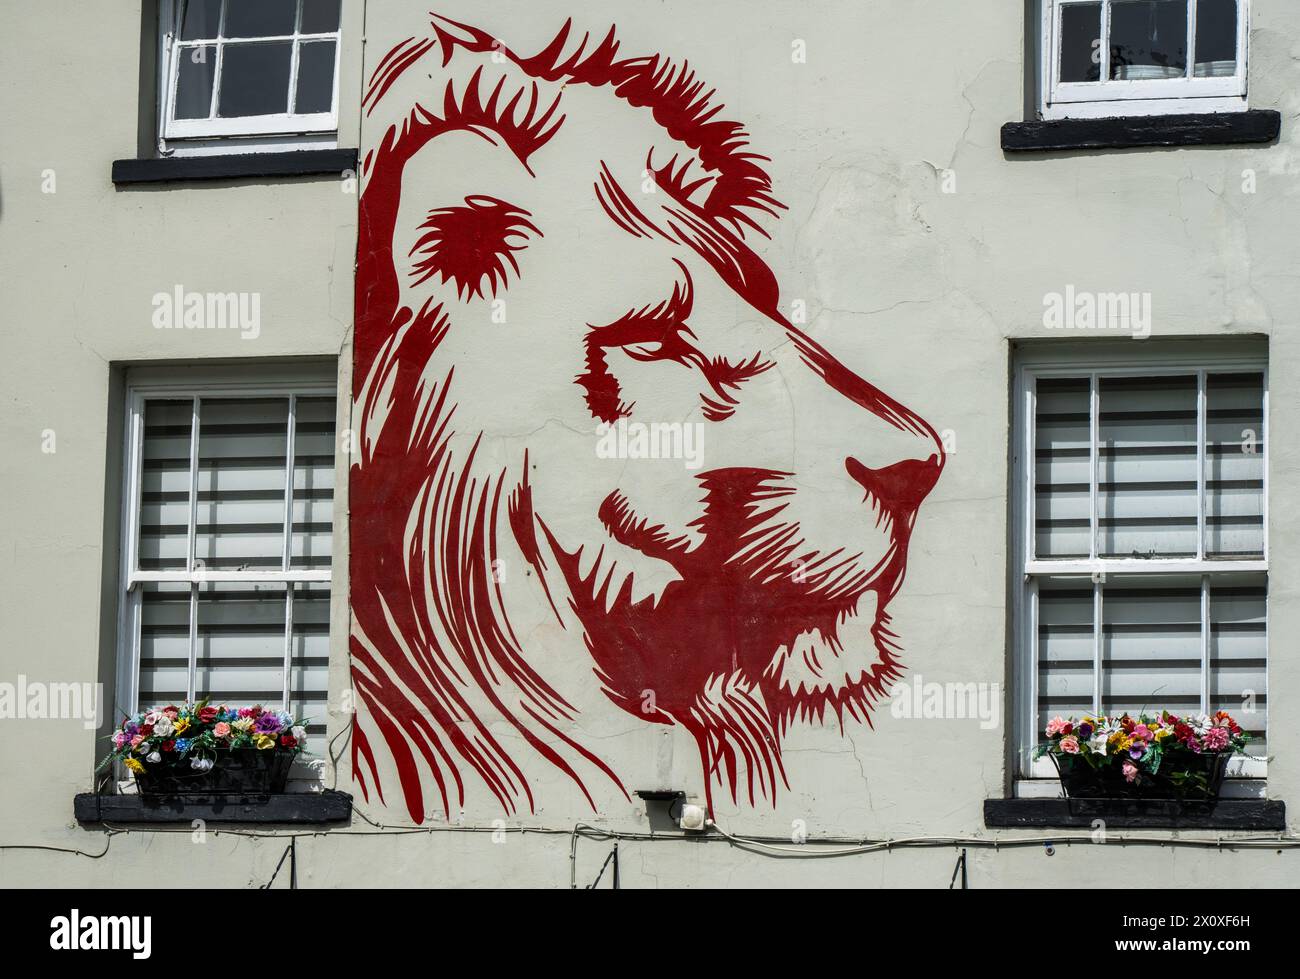 Y Llew Coch (Red Lion), Machynlleth. Wales. Stock Photo